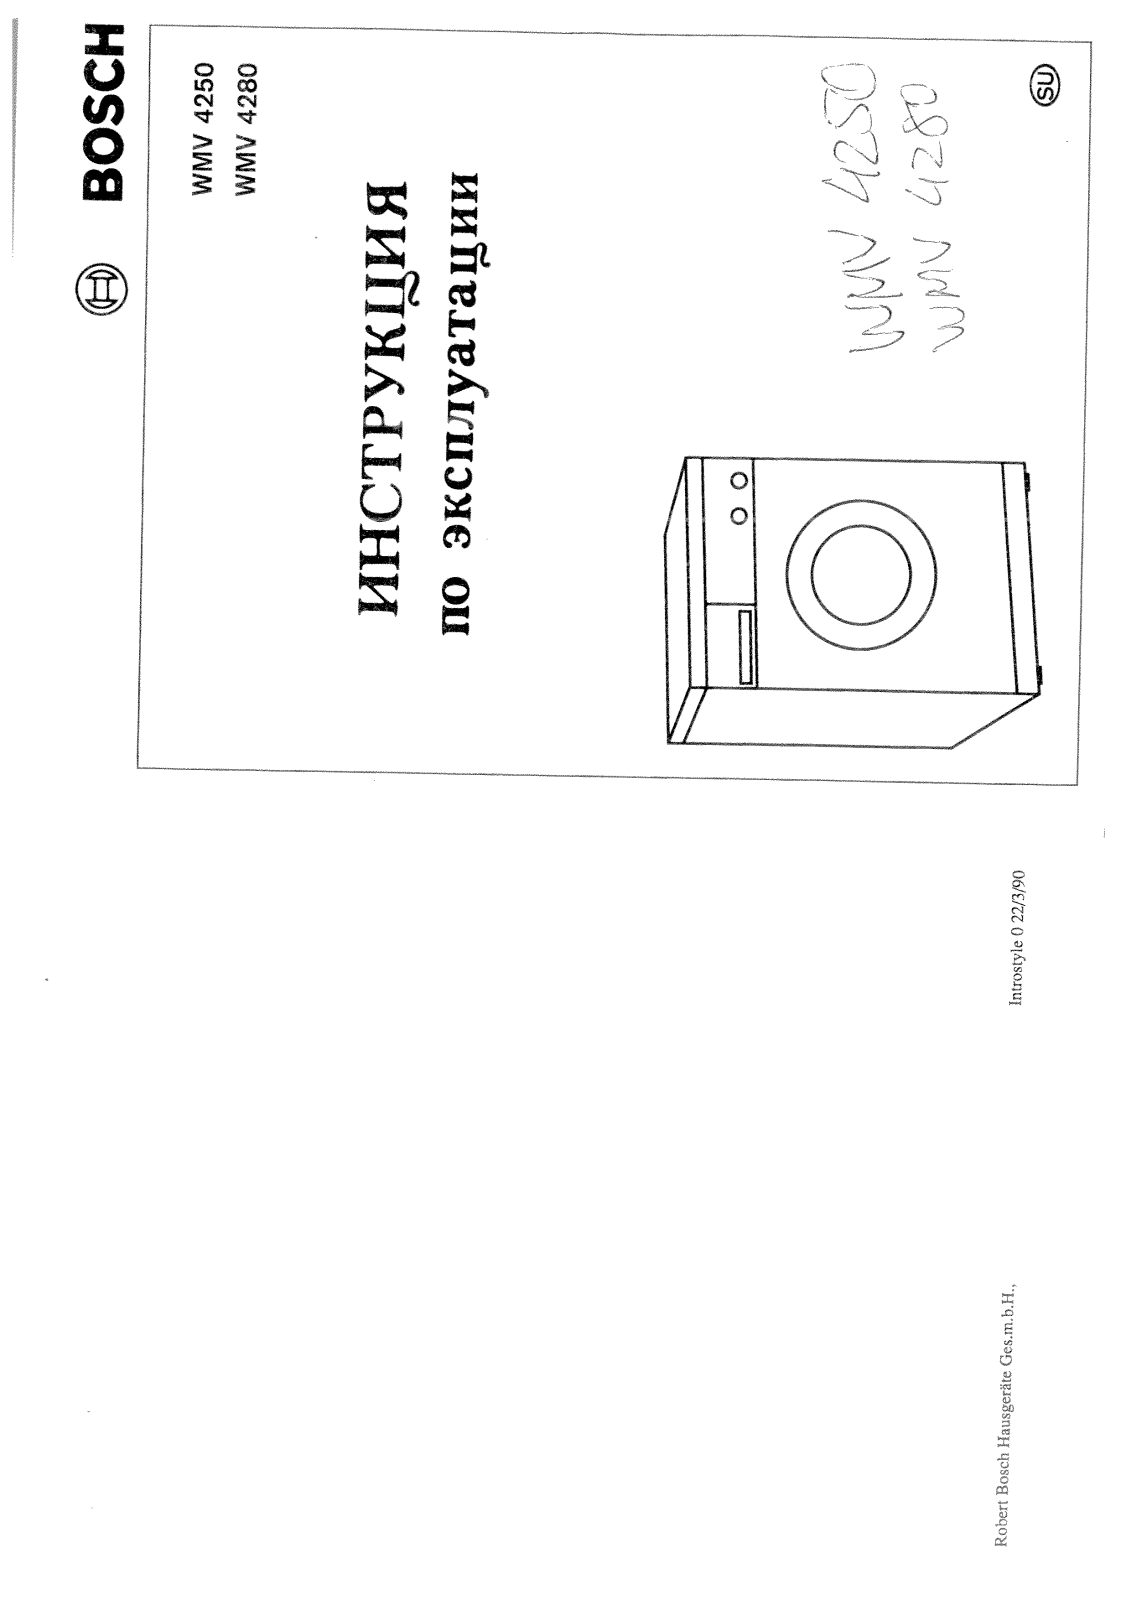 BOSCH WMV 4250 User Manual